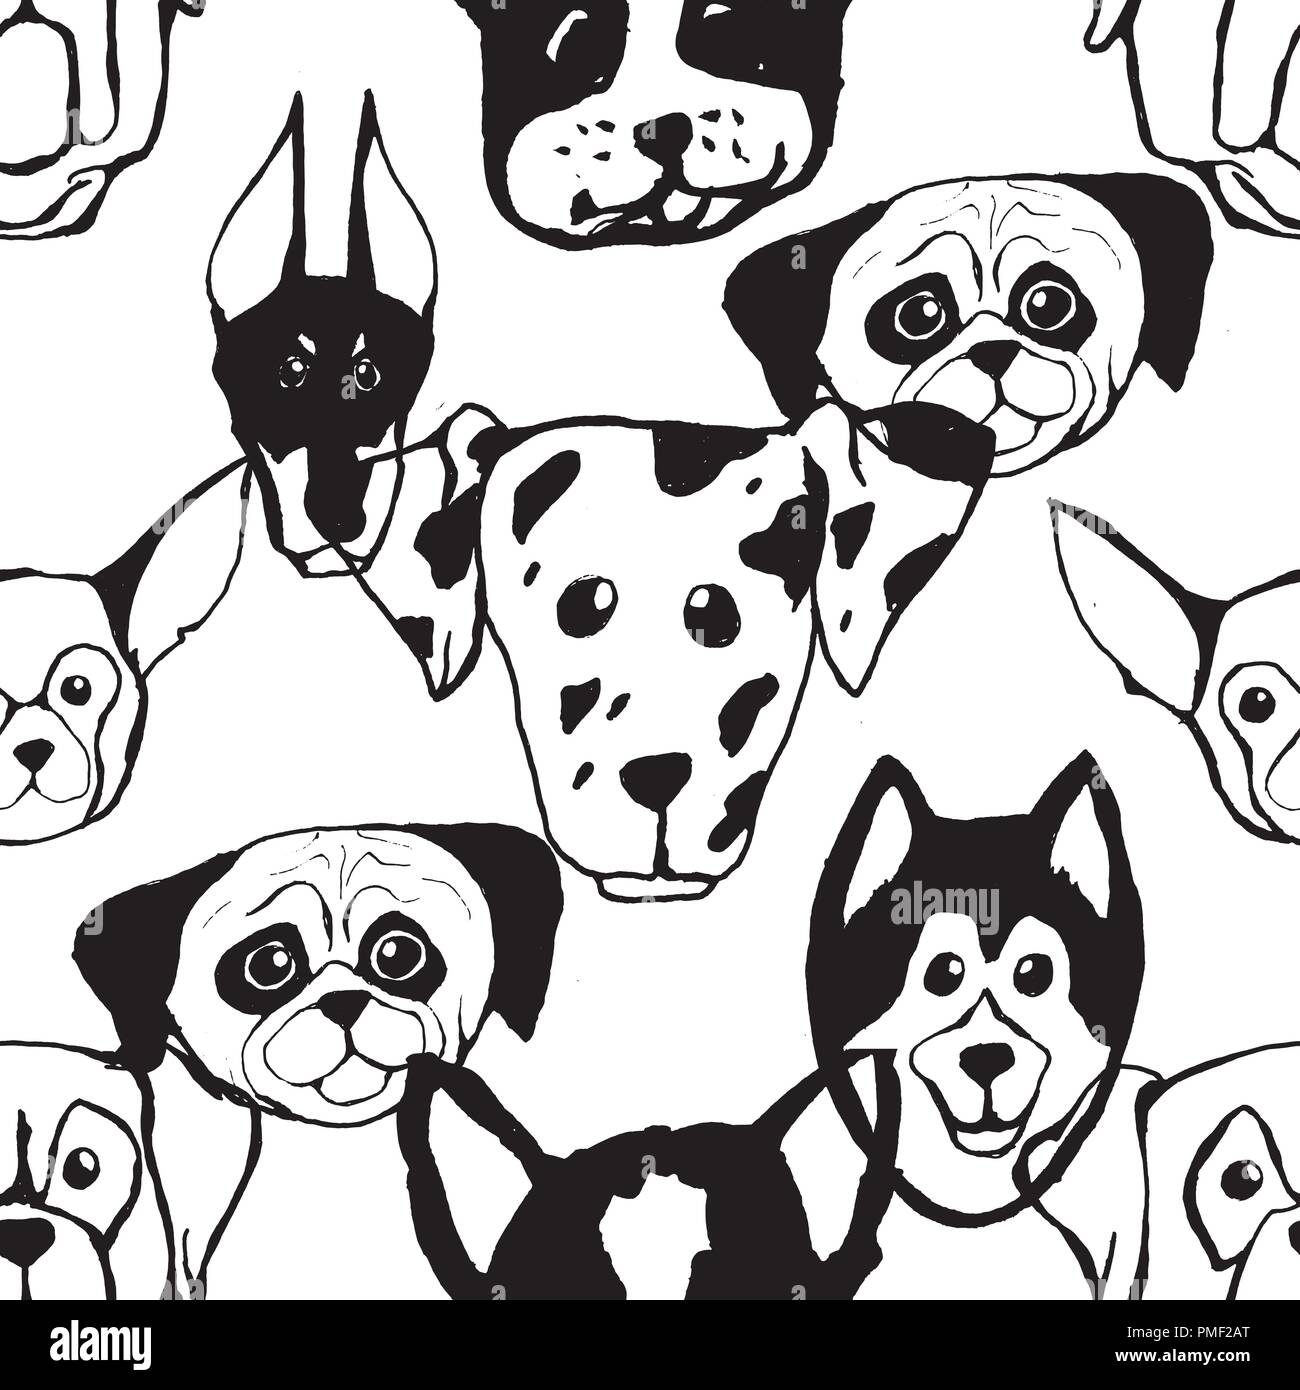 Seamless pattern with Dog breeds. Bulldog, Husky, Alaskan Malamute, Retriever, Doberman, Poodle, Pug, Shar Pei, Dalmatian Stock Vector